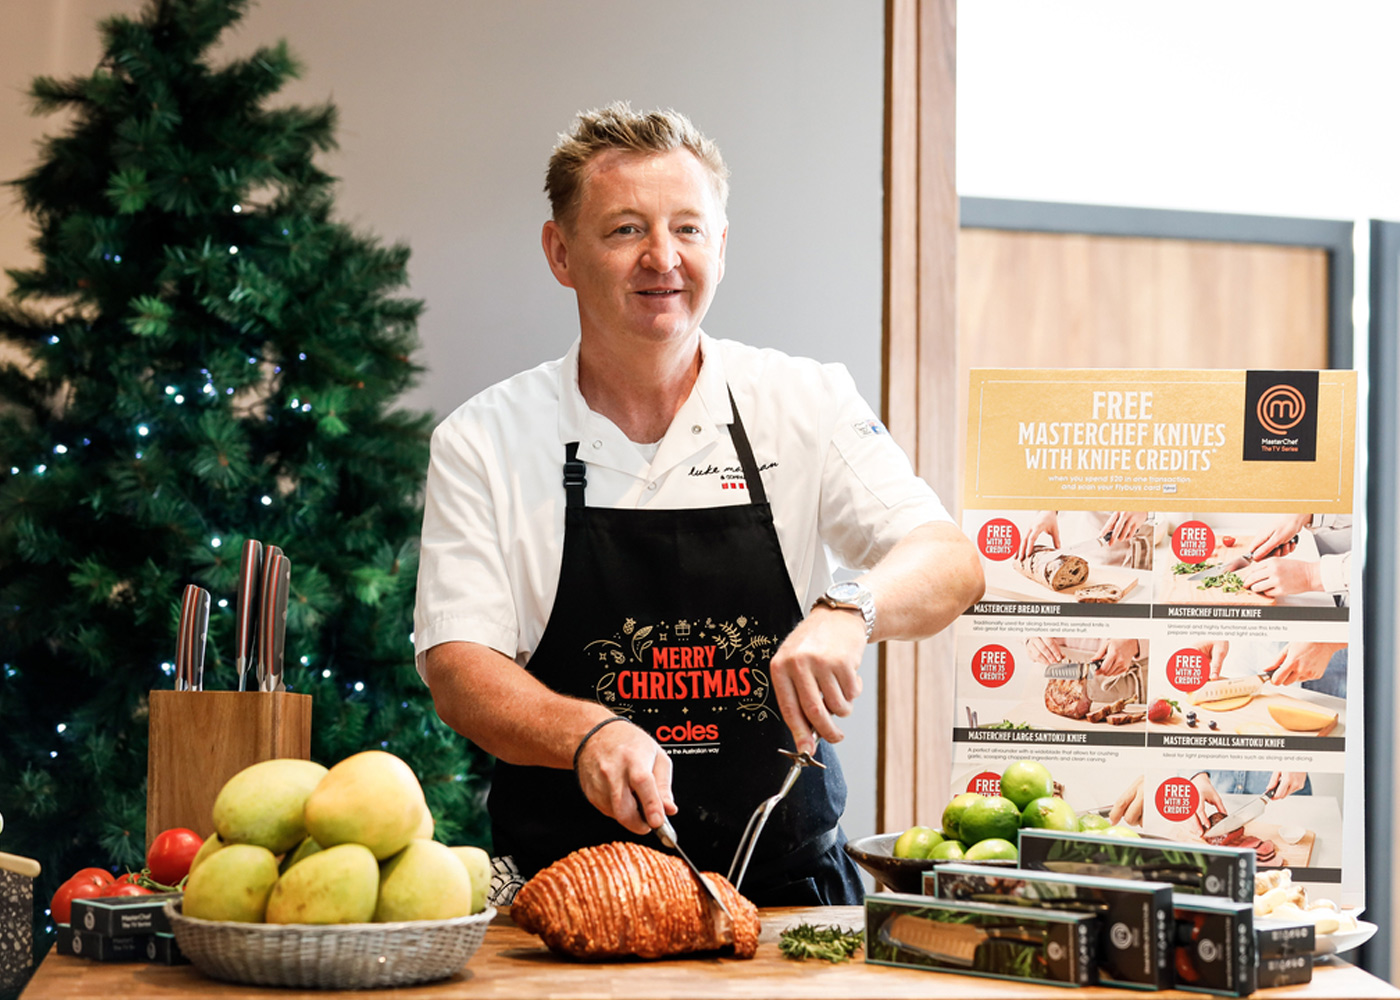 Award-winning chef Luke Mangan joins Coles as an Ambassador for new campaign